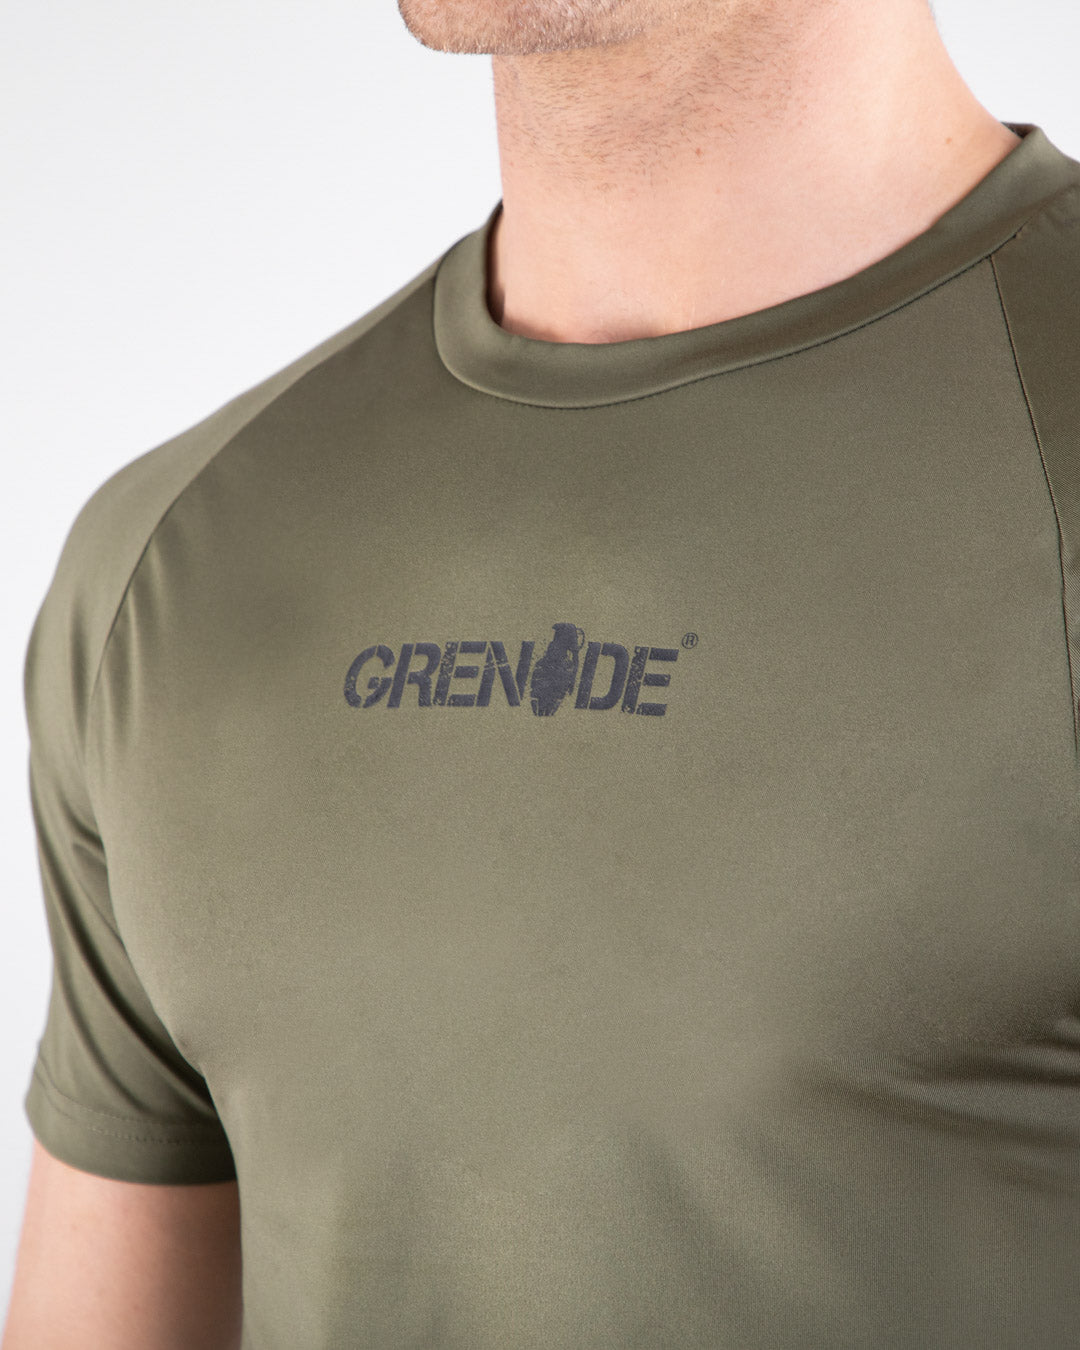 Grenade Mens Recruit T-Shirt Army Green Close Up